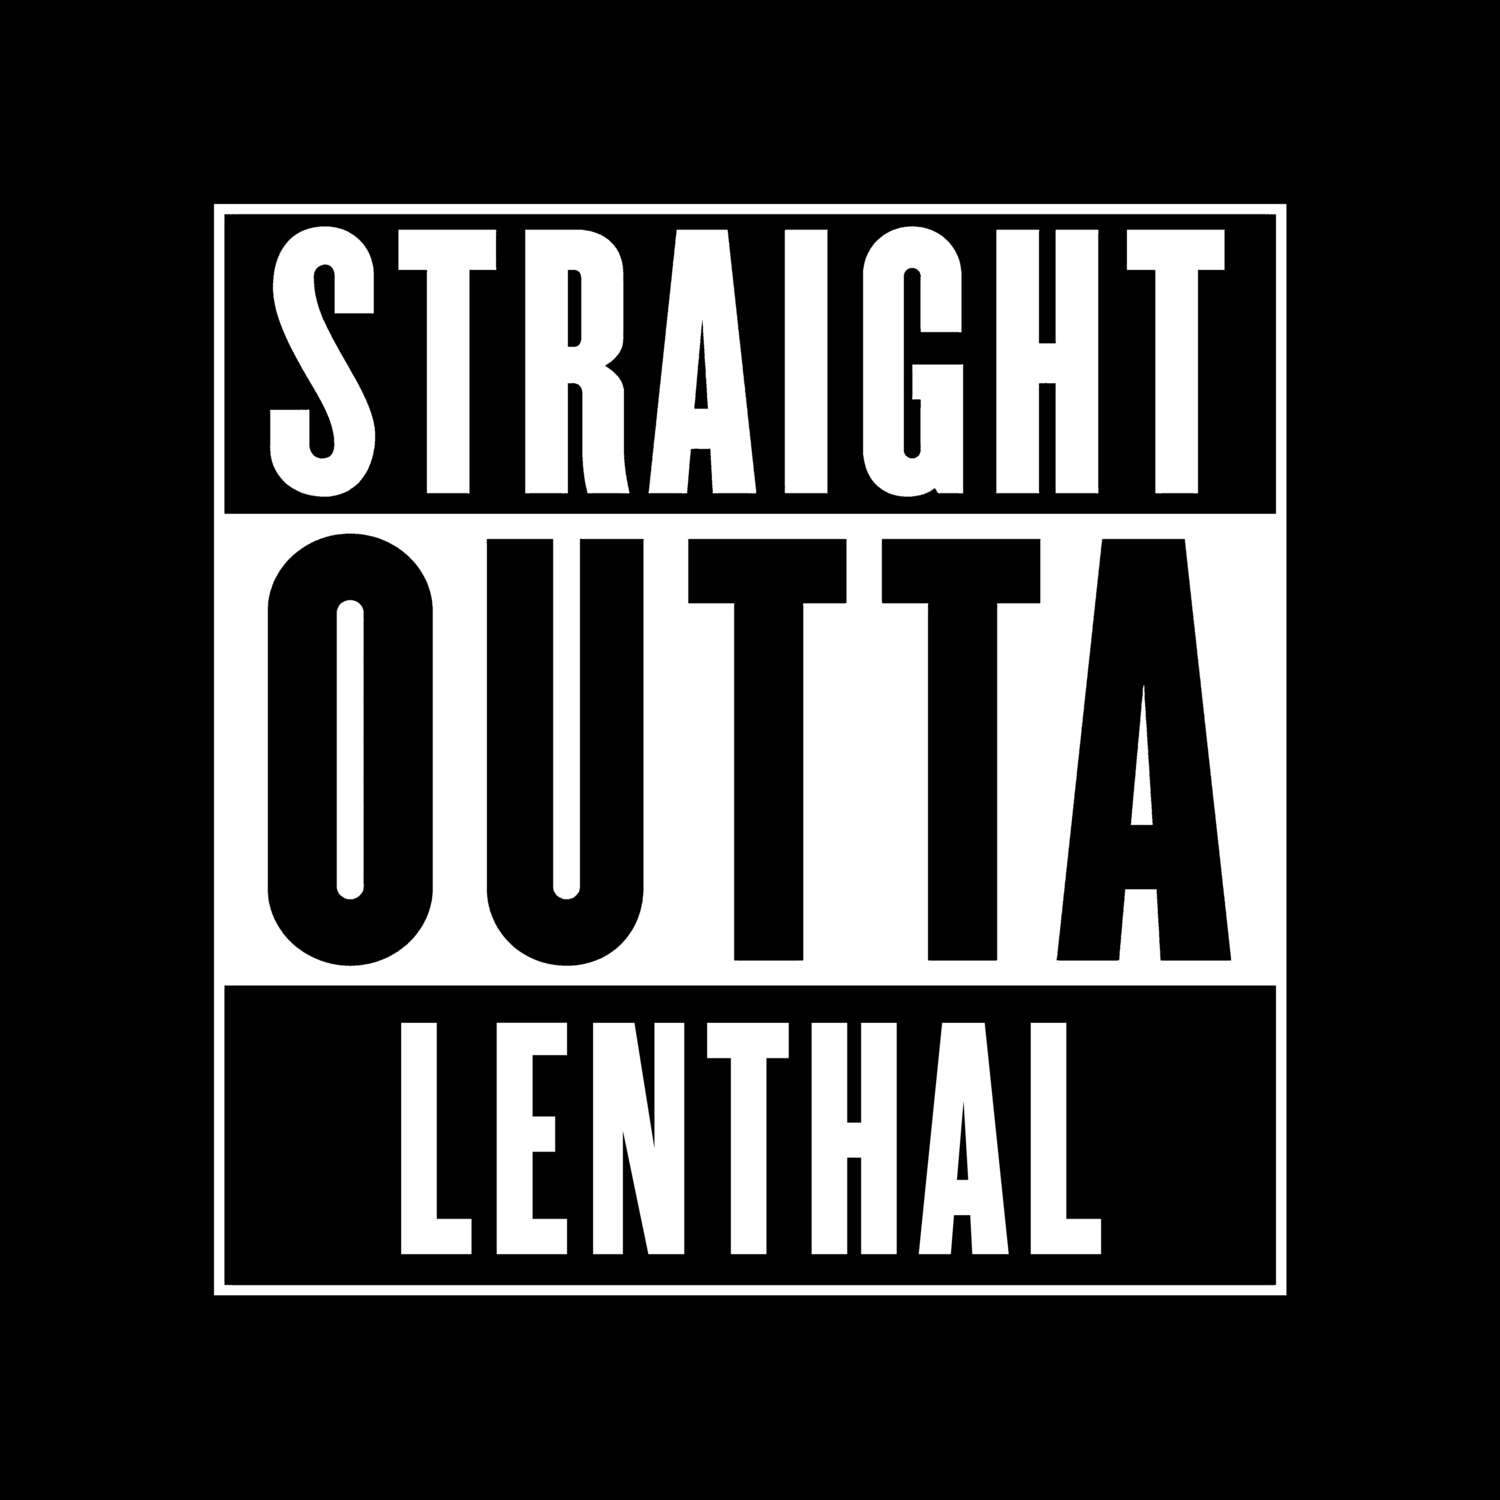 Lenthal T-Shirt »Straight Outta«